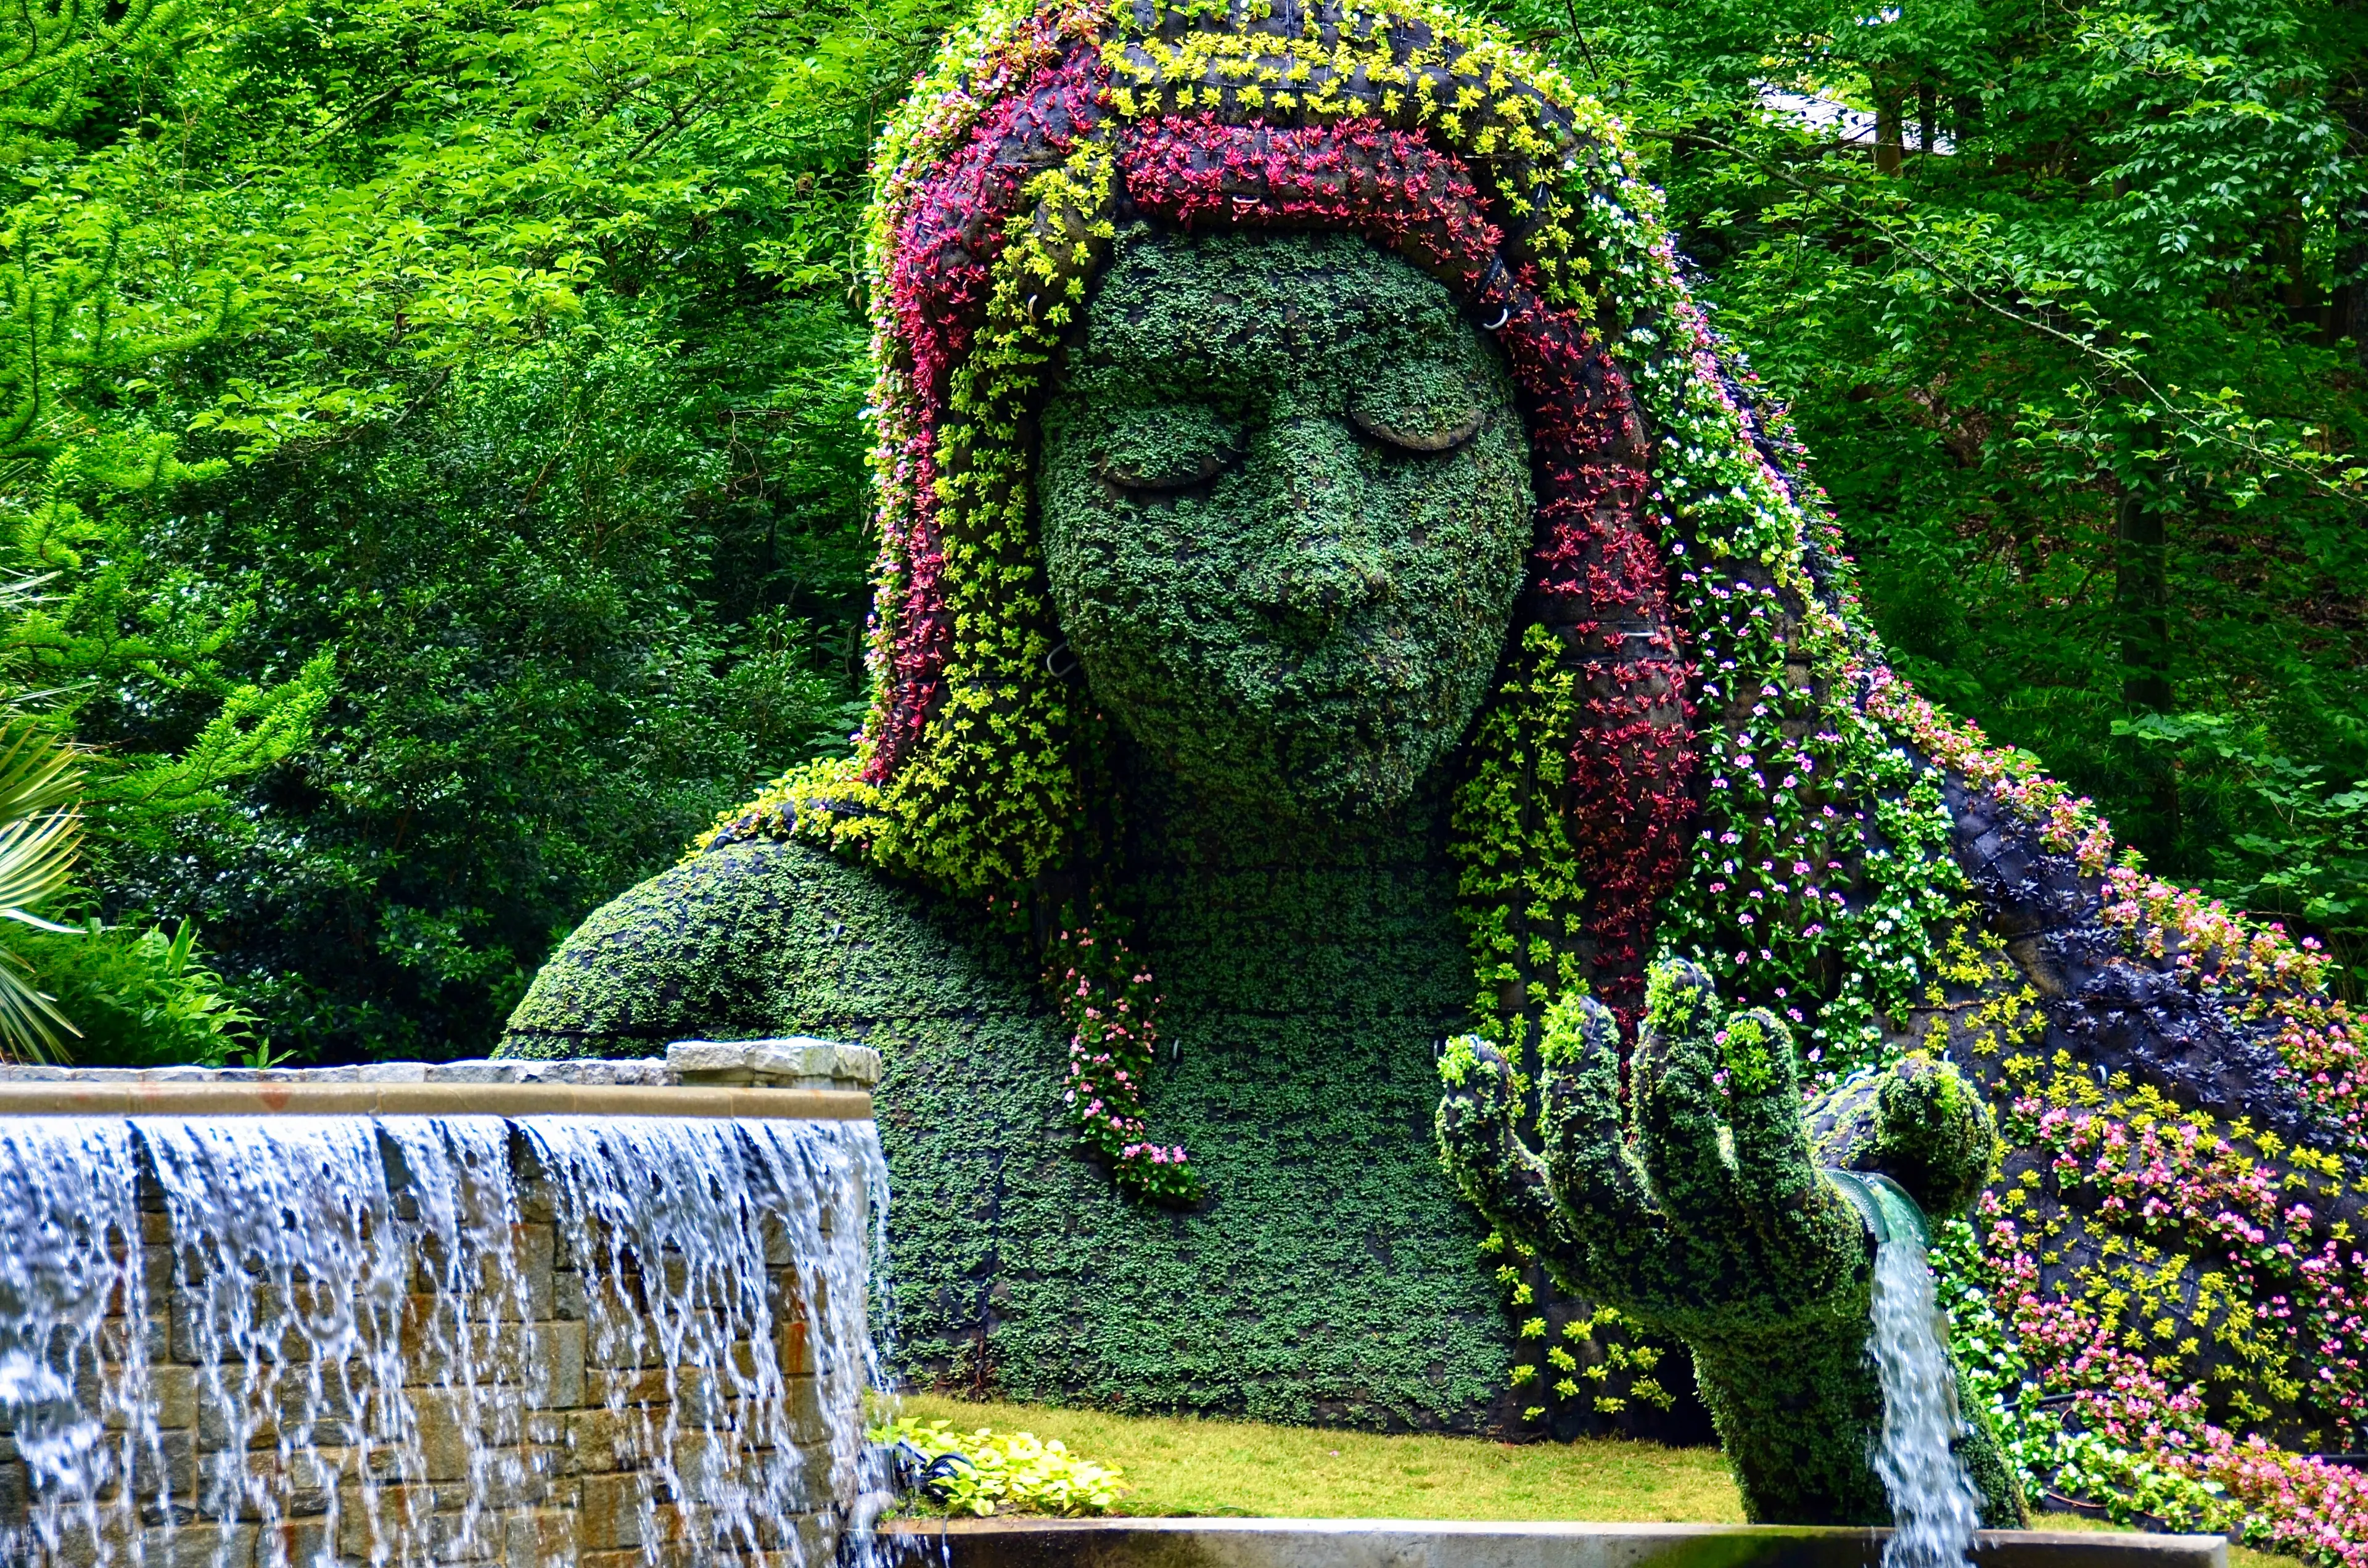 Earth Goddess sculpture in the Botanical Garden